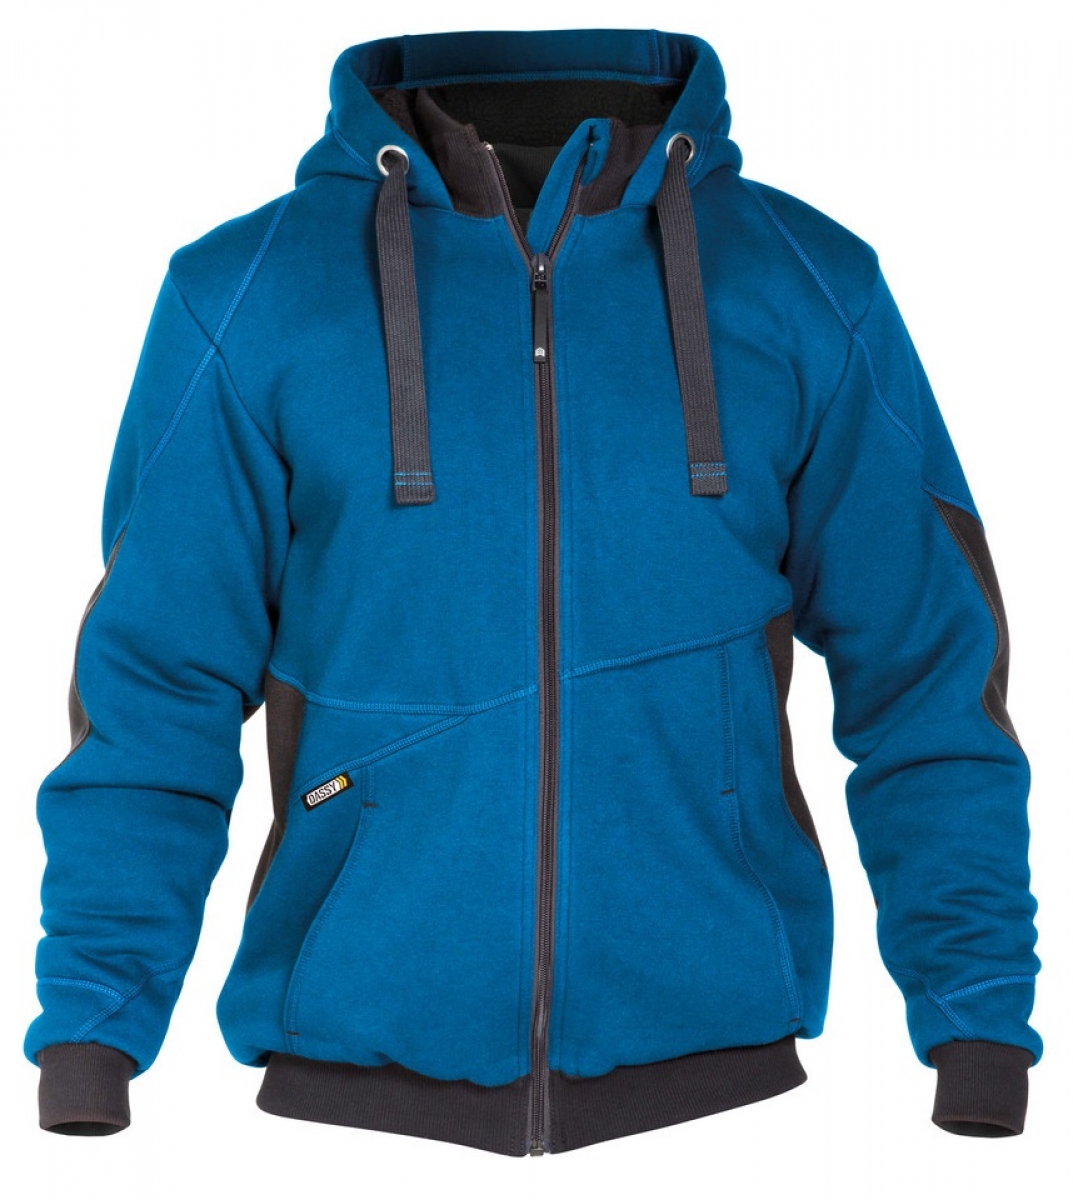 DASSY-Workwear, Sweatshirt-Jacke "PULSE", kornblau/grau